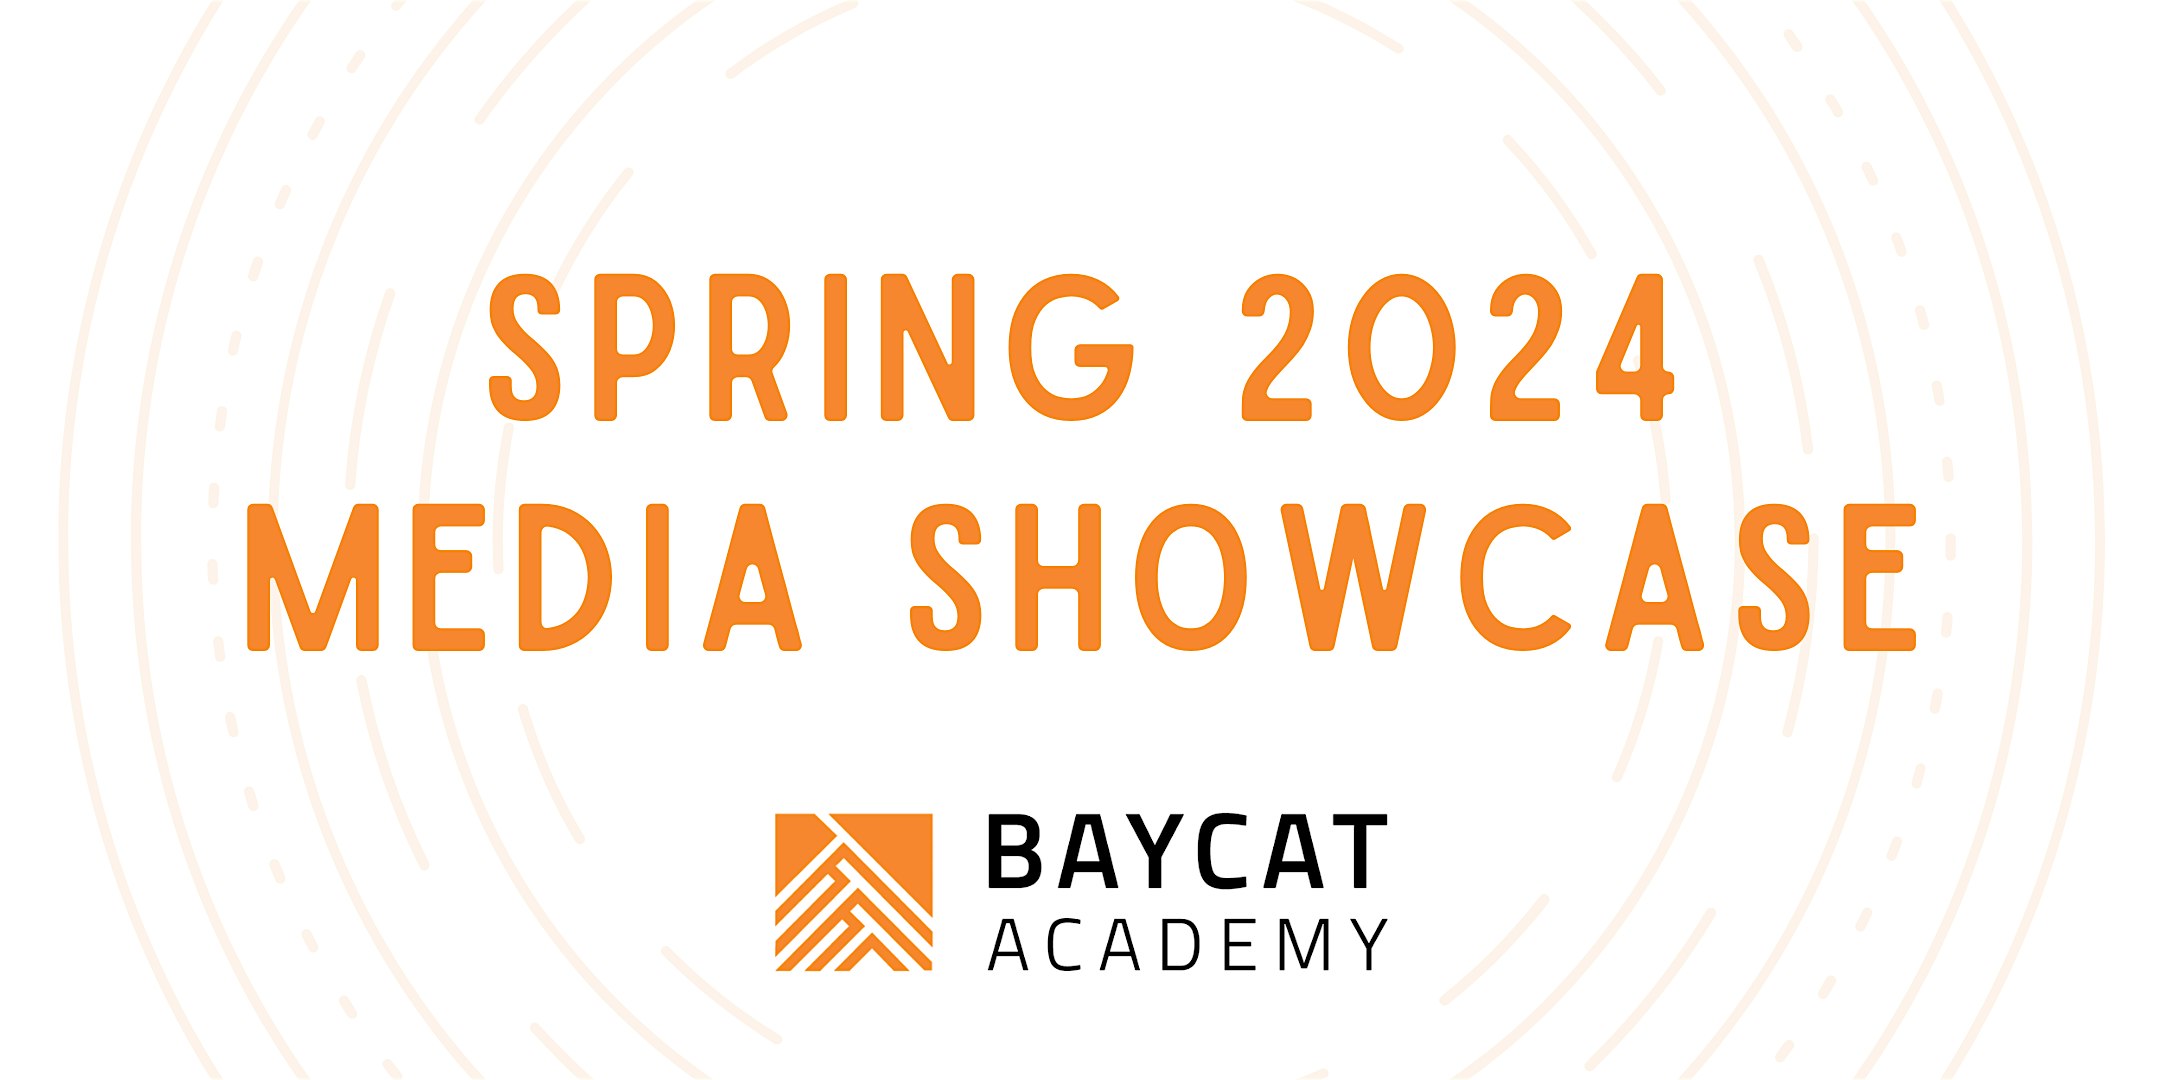 BAYCAT Spring 2024 Media Showcase